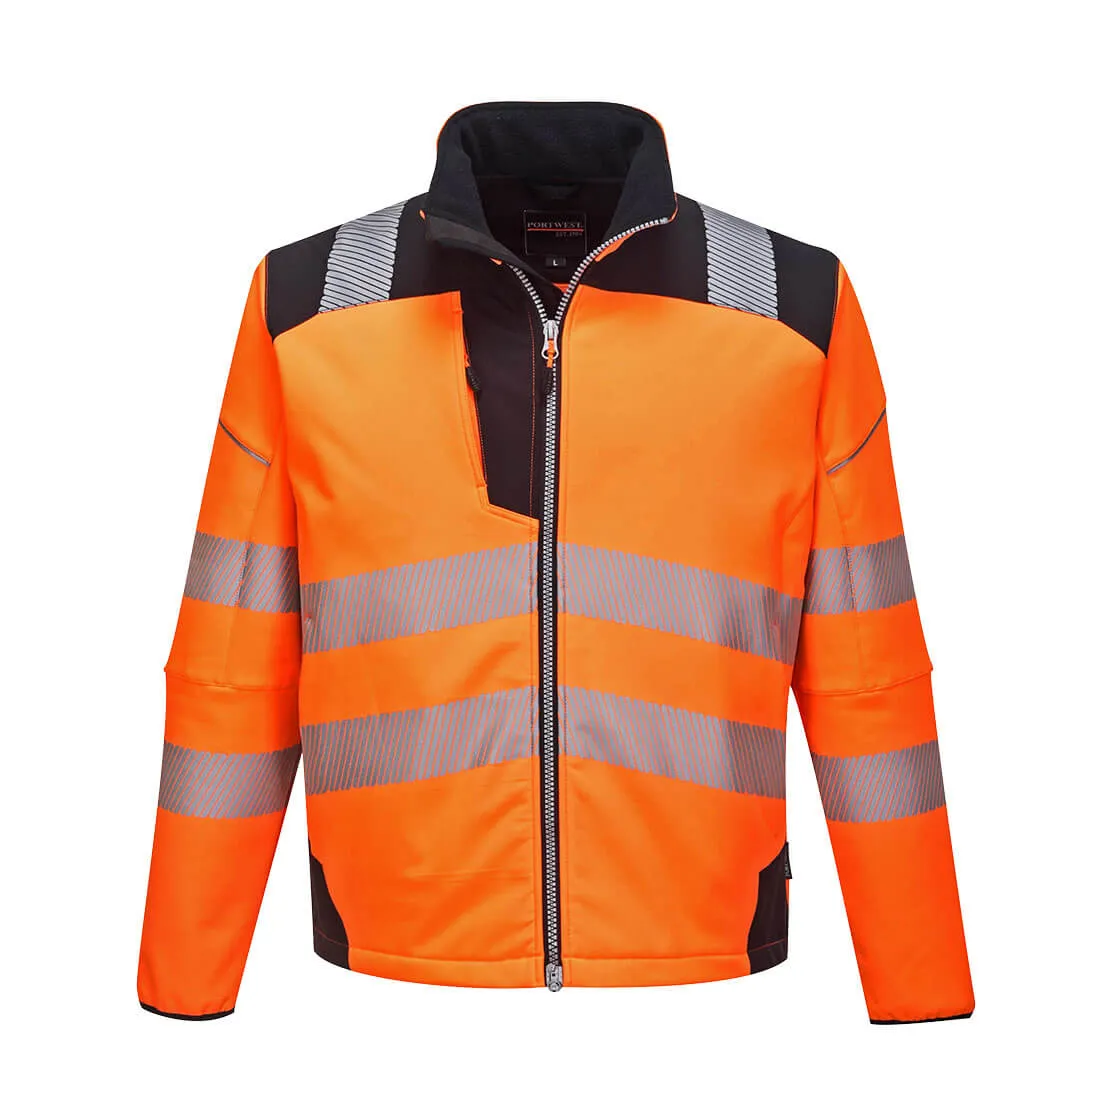 PW3 Hi Vis Soft Shell Winter Rain Jacket - Orange / Black, XL